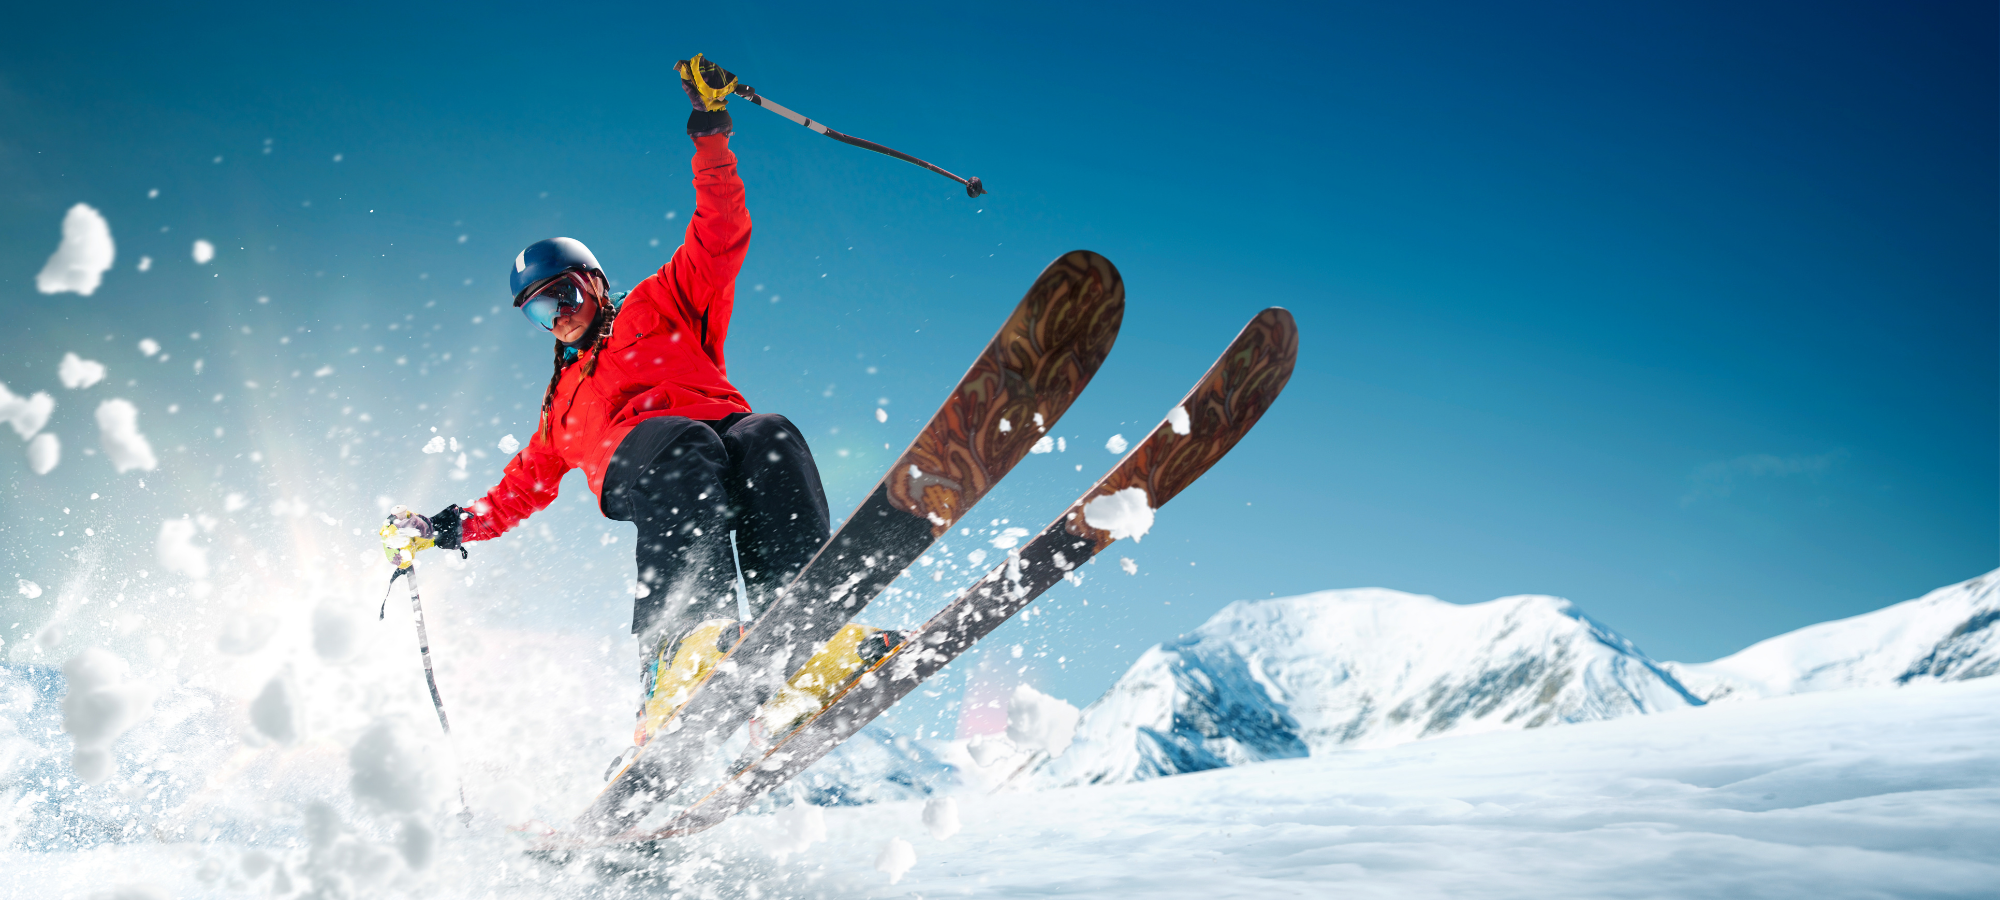 Custom Orthotics in Skiing and Snowboarding